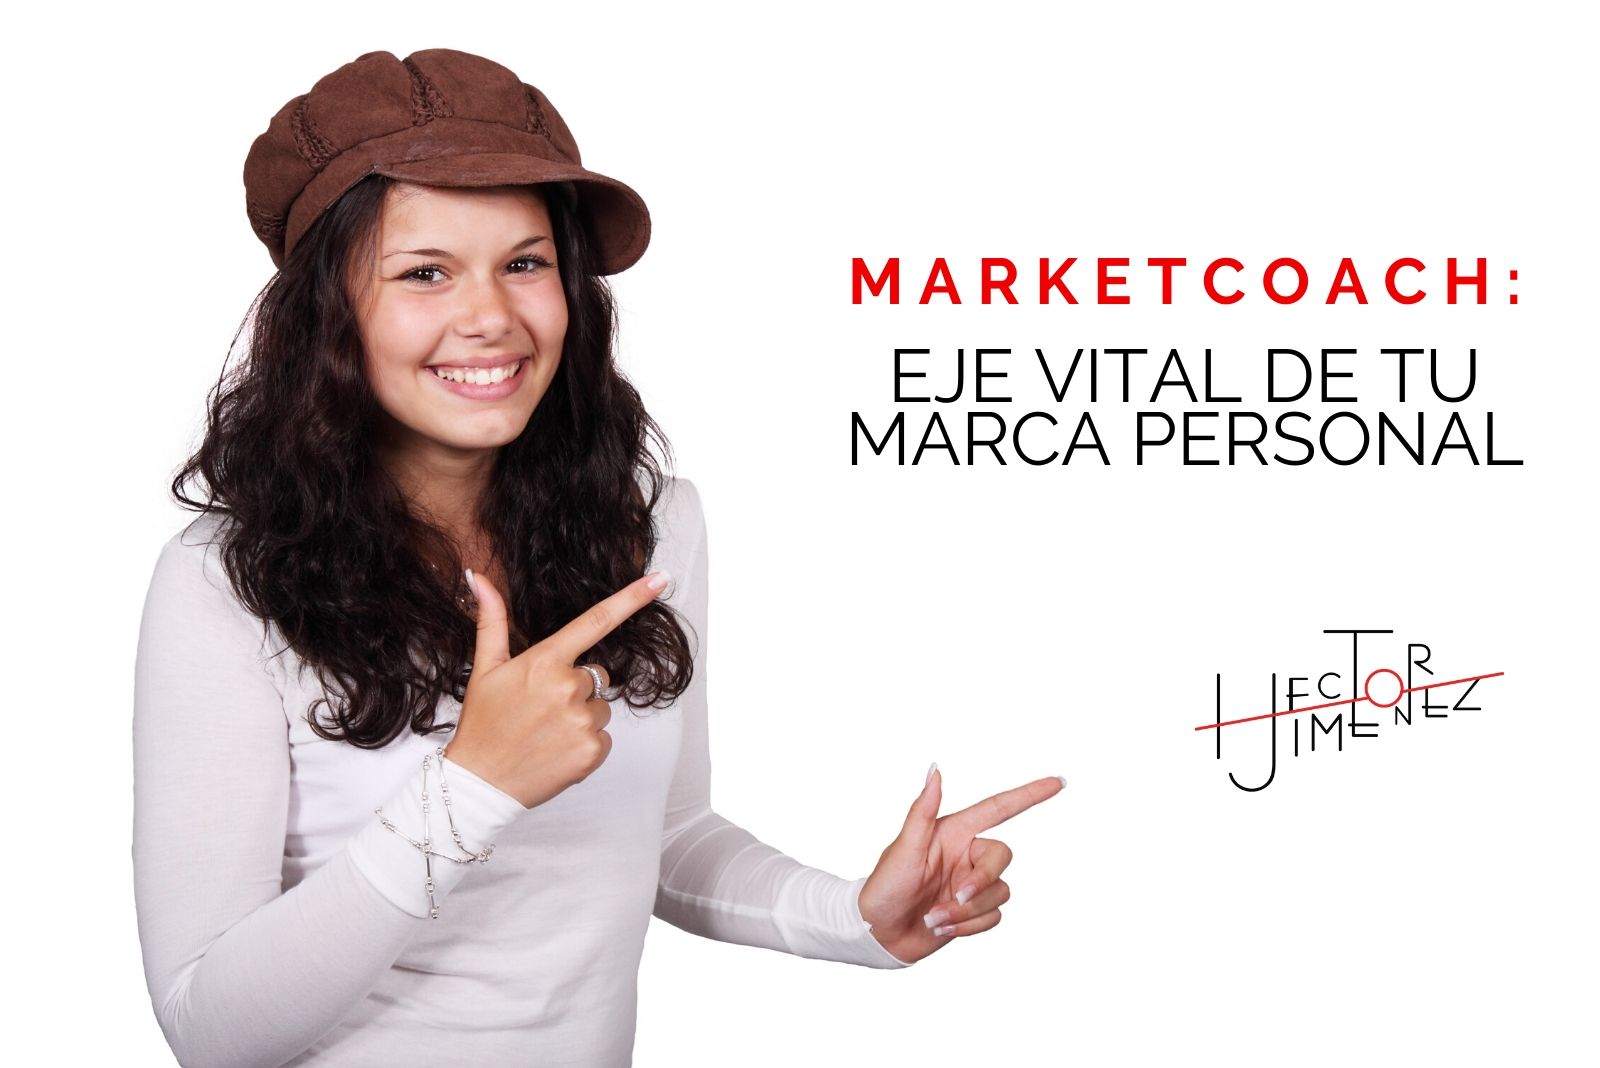 Héctor-Jimenez-Qué-es-marketcoach-1